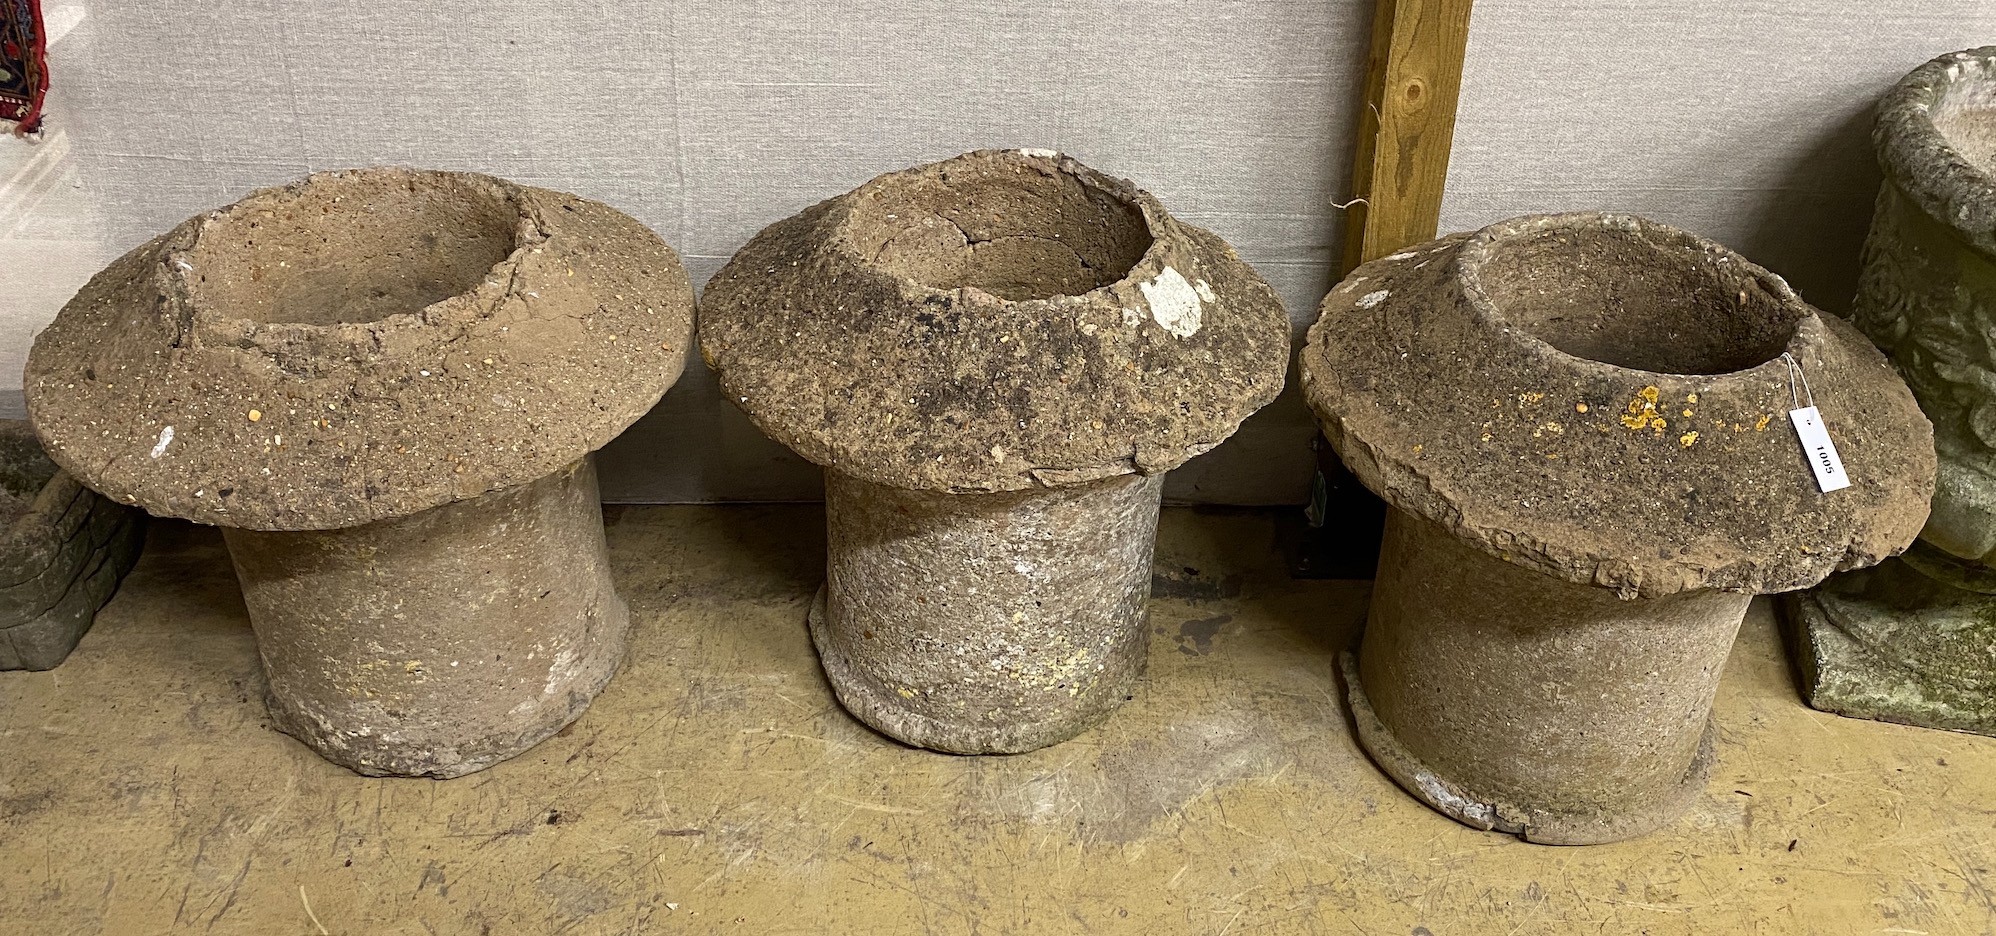 Three reconstituted stone chimney pot planters, diameter 54cm, height 50cm